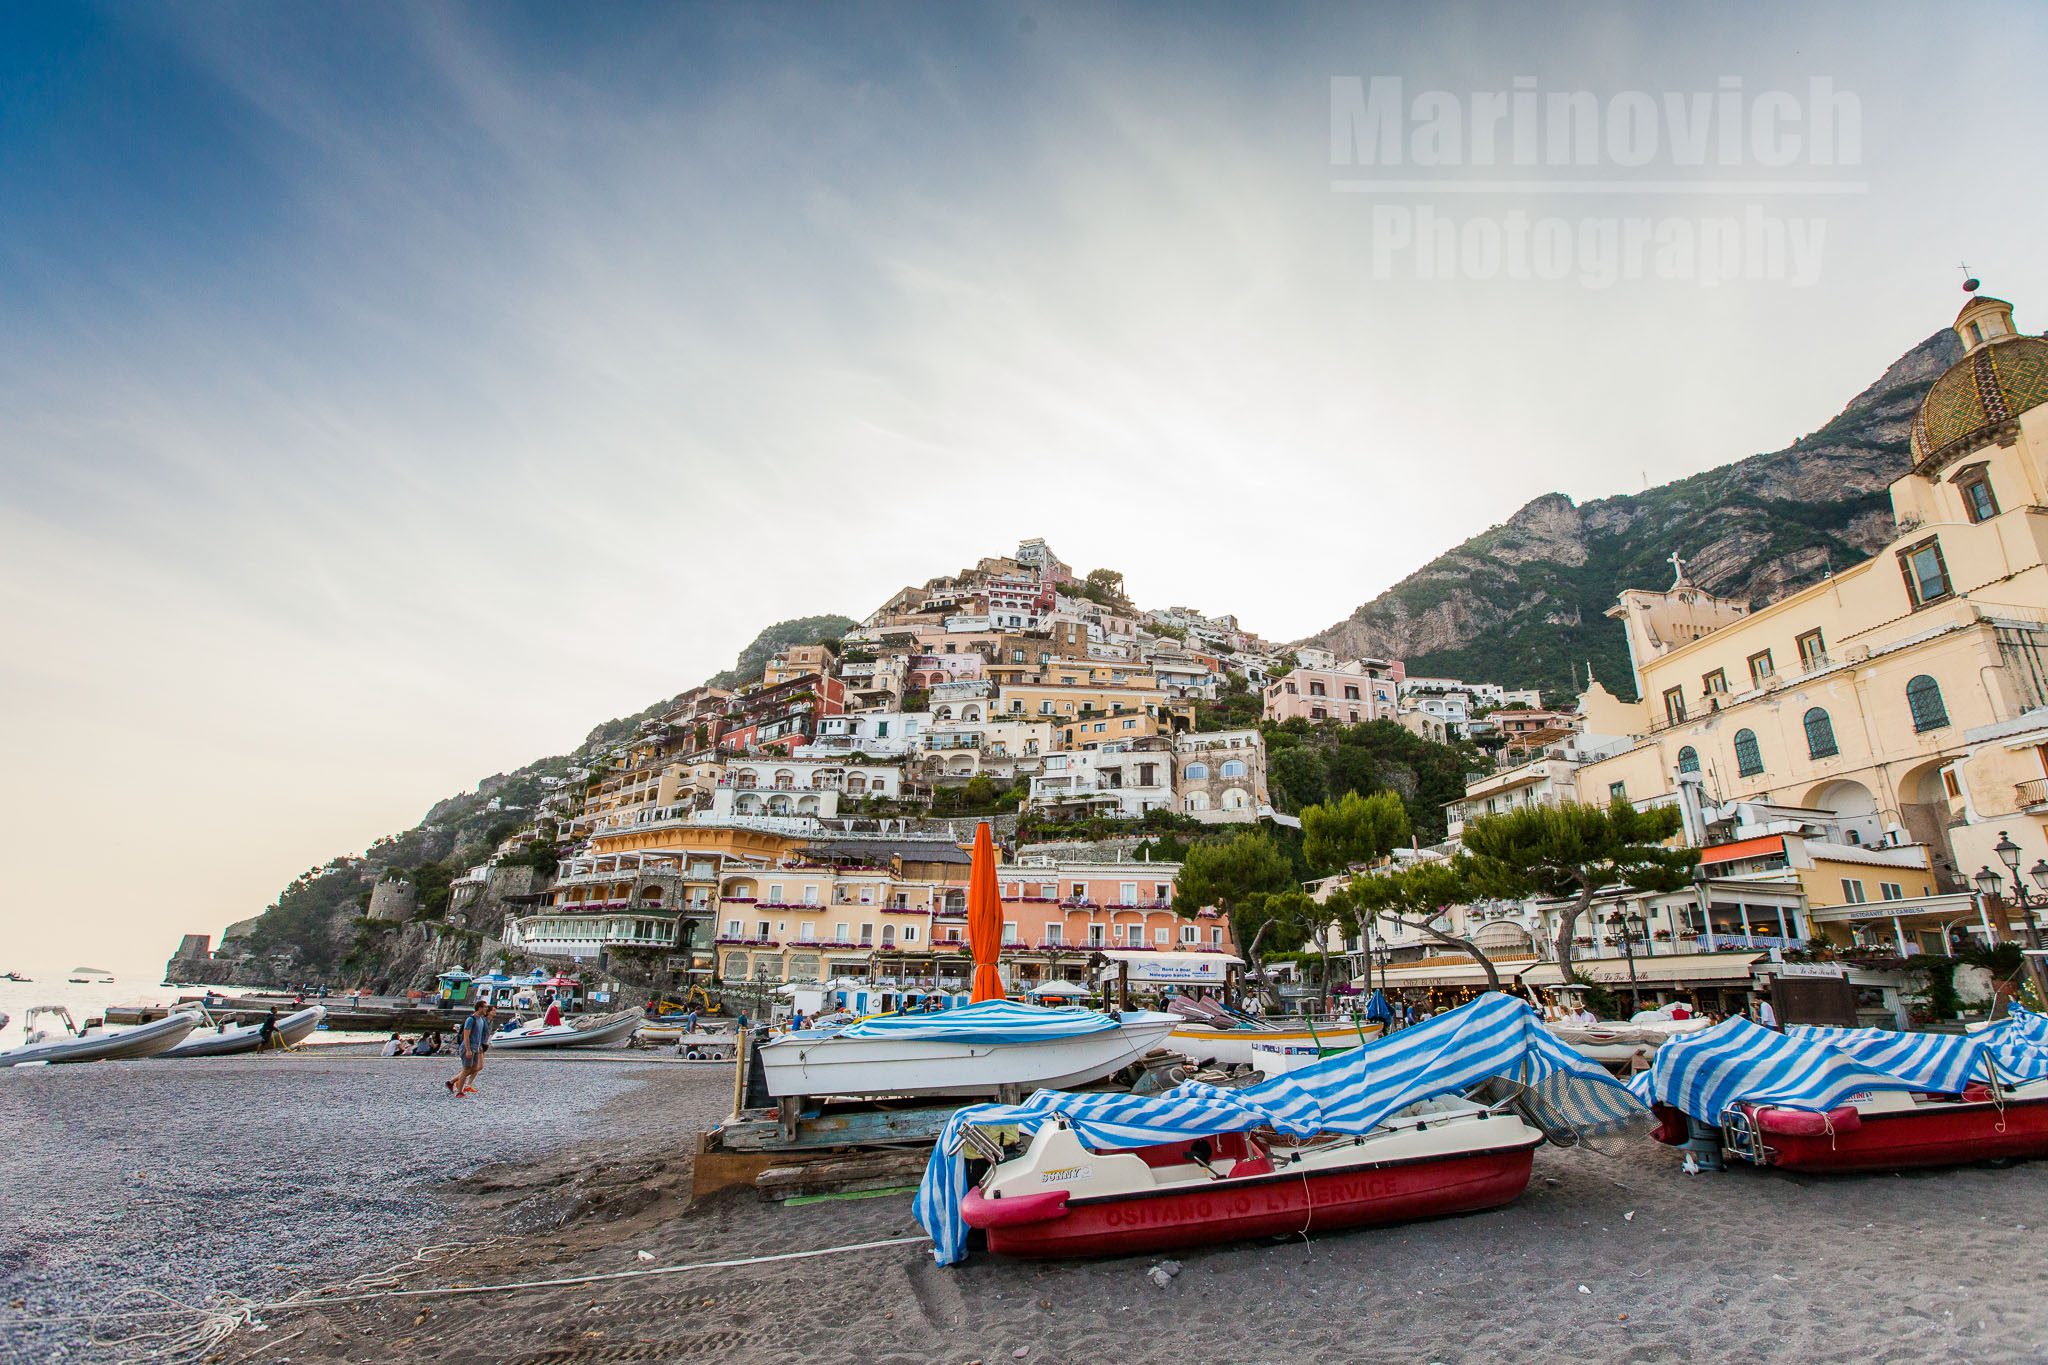 “Positano – Travel Photography – Marinovich Photography”